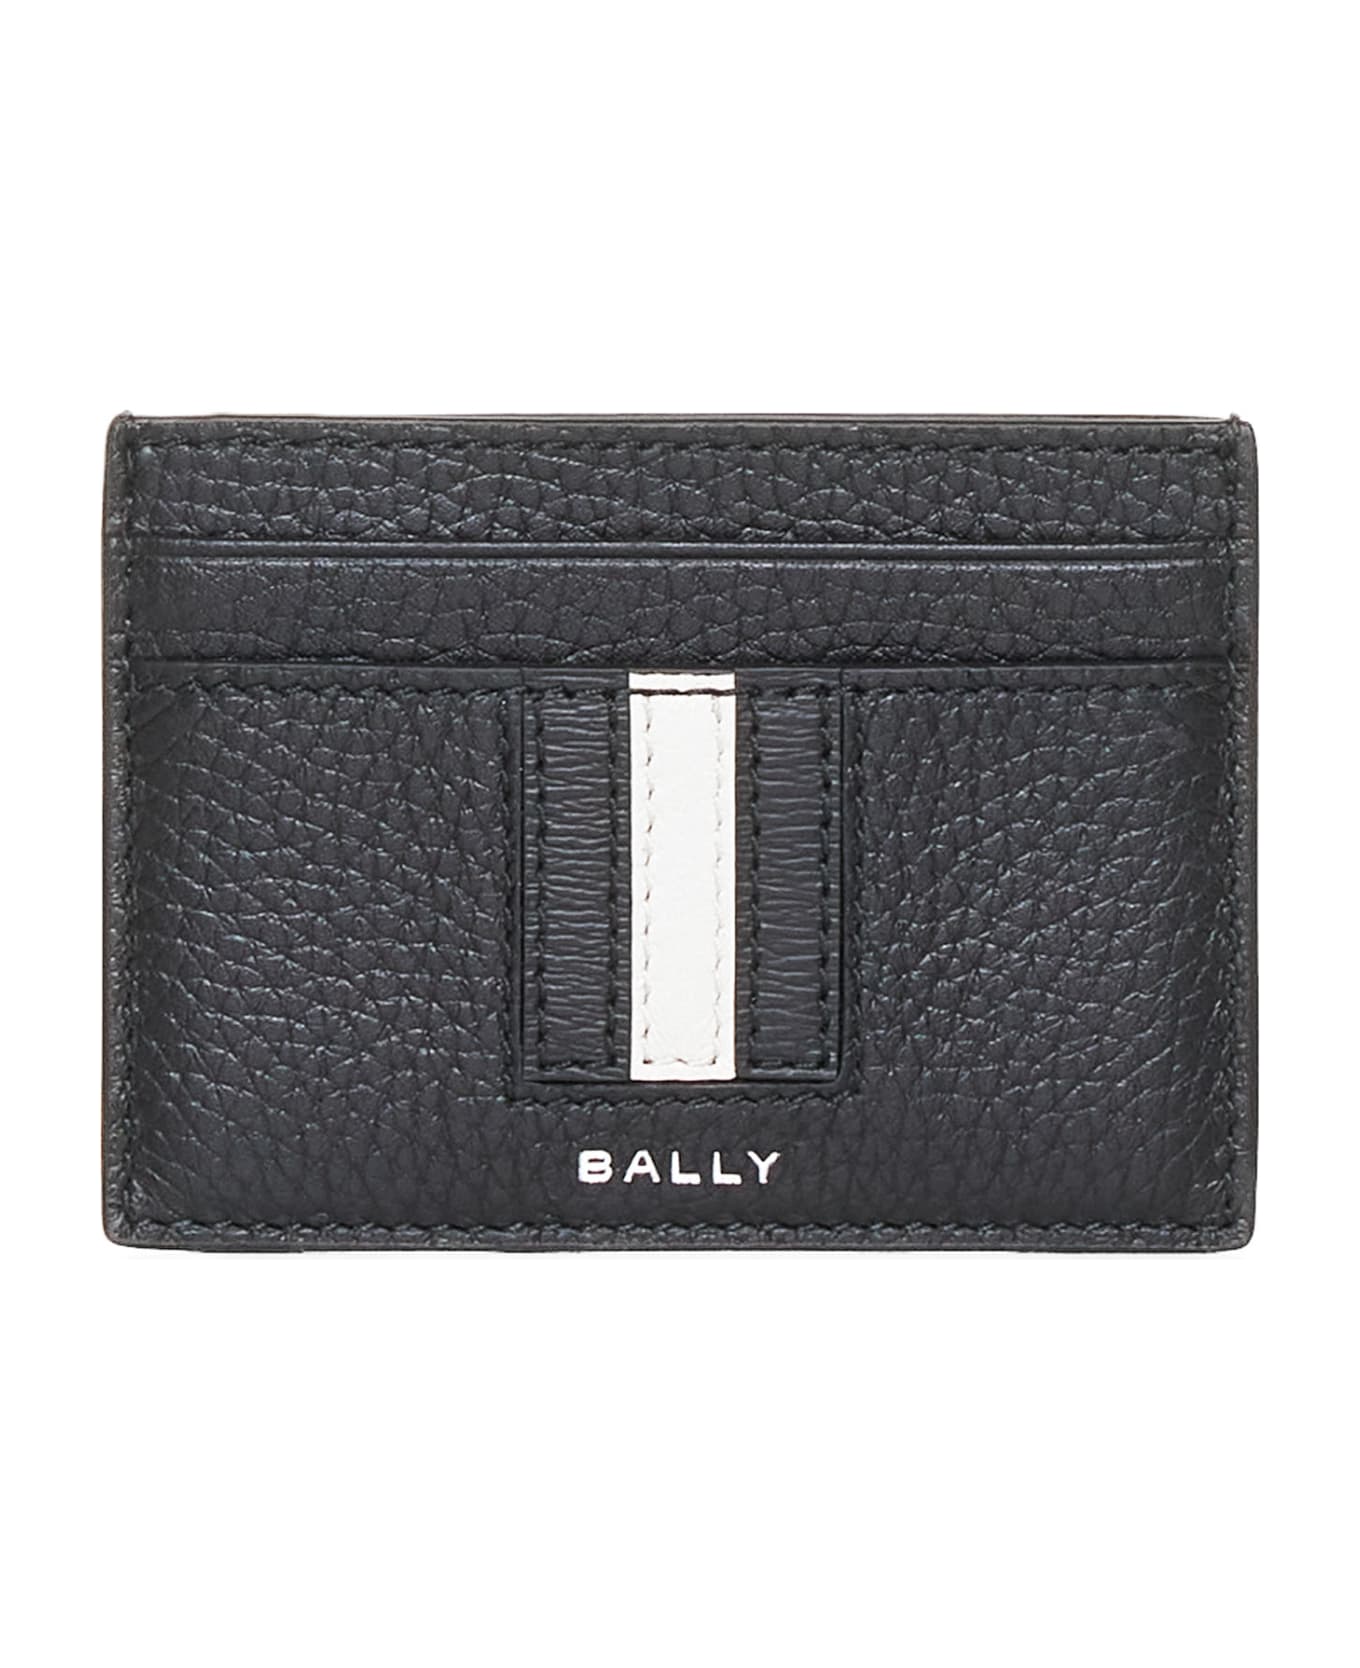 Bally Wallet - Black+palladio